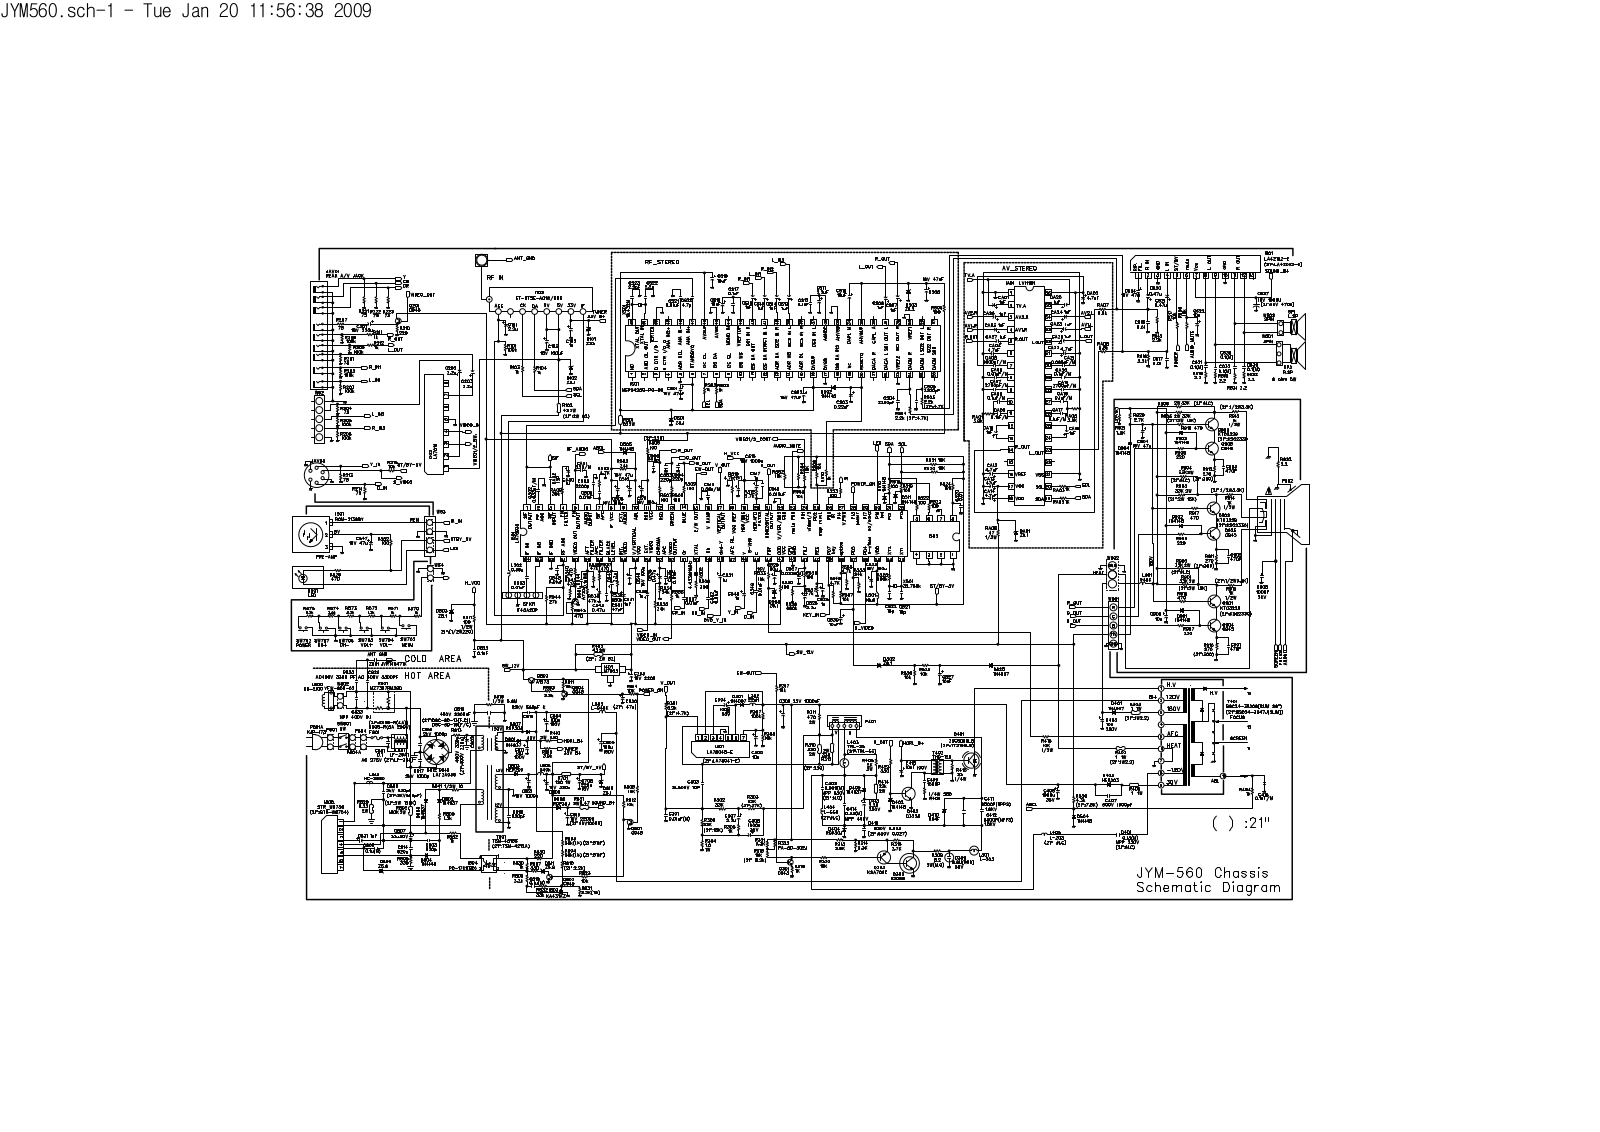 RCA STR W6756 J, JYM 560 Diagram